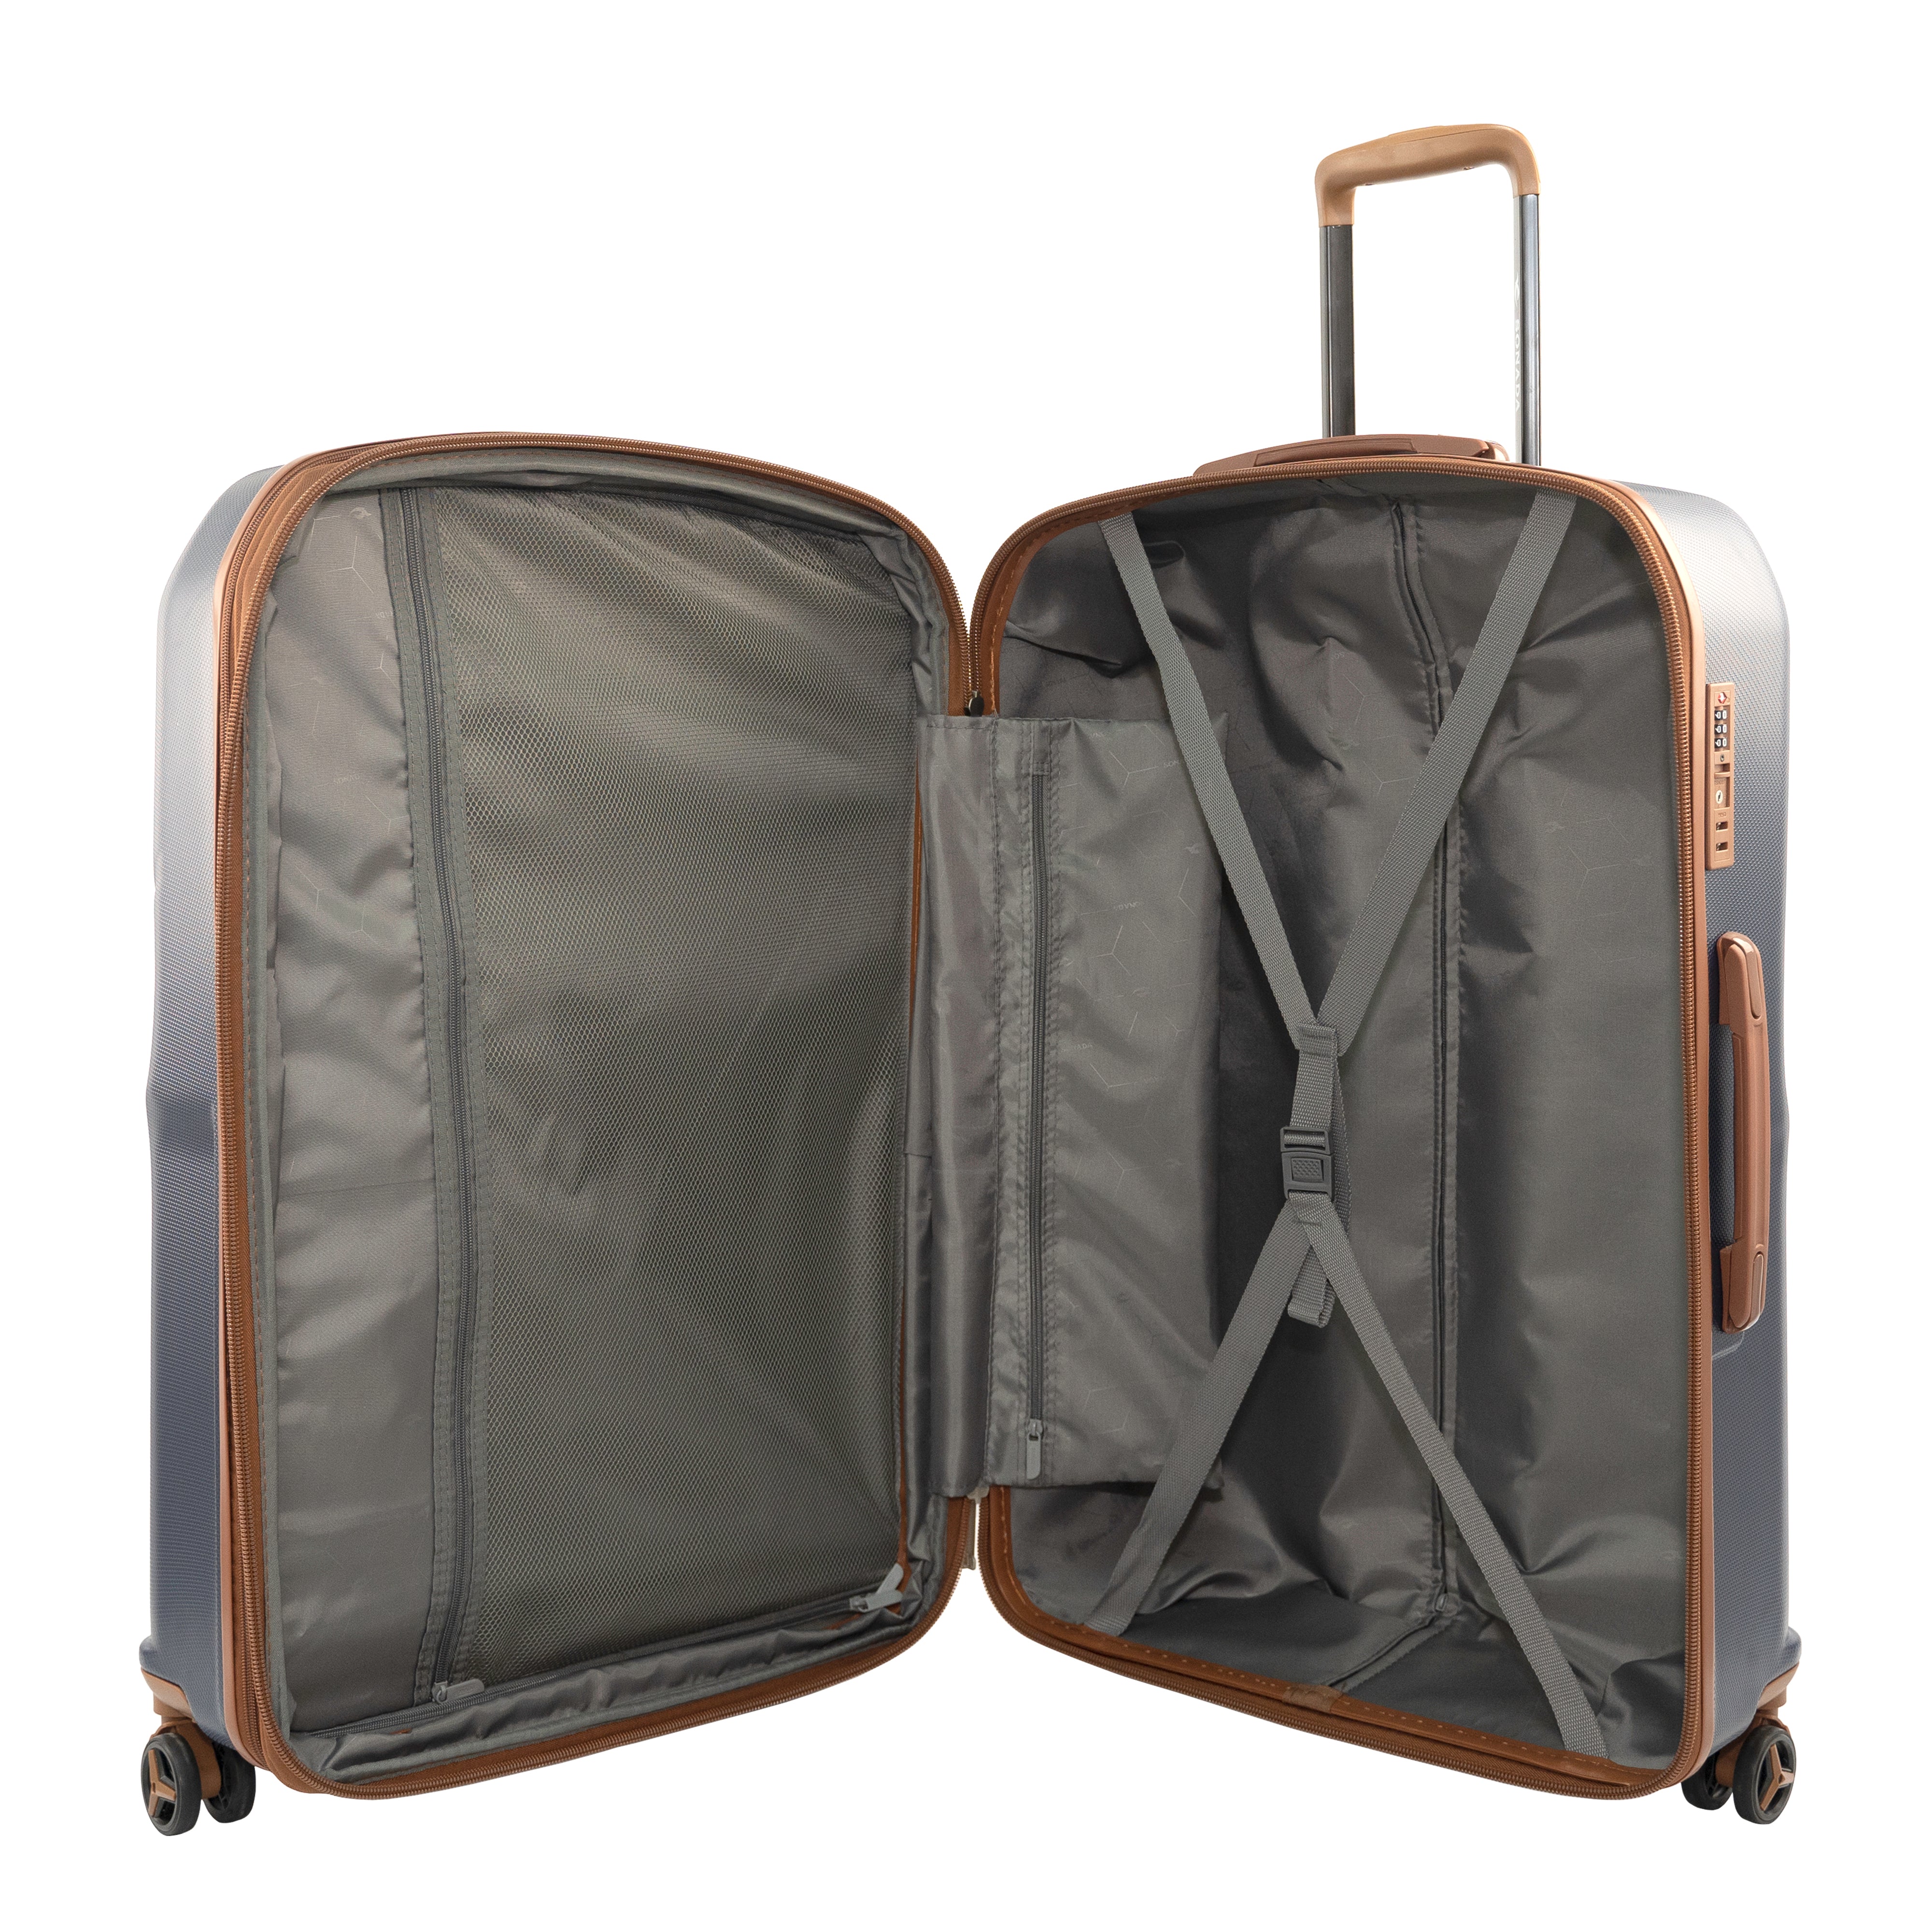 Sonada Upright Luggage Expandable Hardside Suitcase Check In Blue